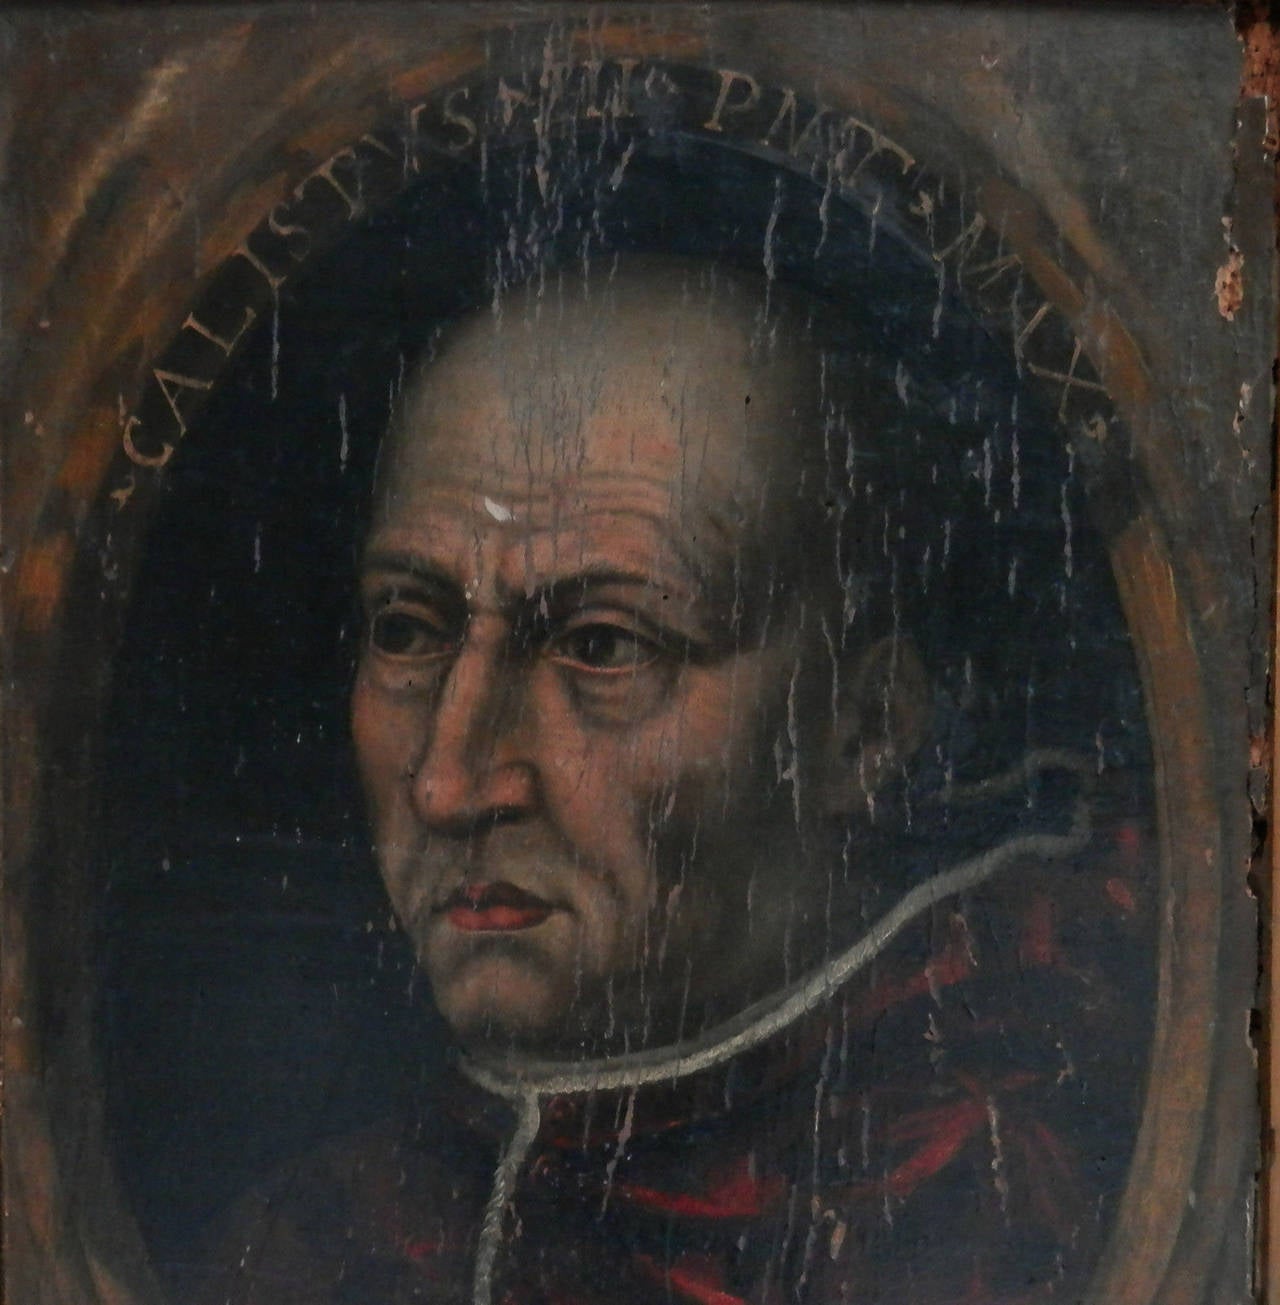 Pope Callixtus III born Alfons de Borja - XV century - Renaissance Painting by Unknown